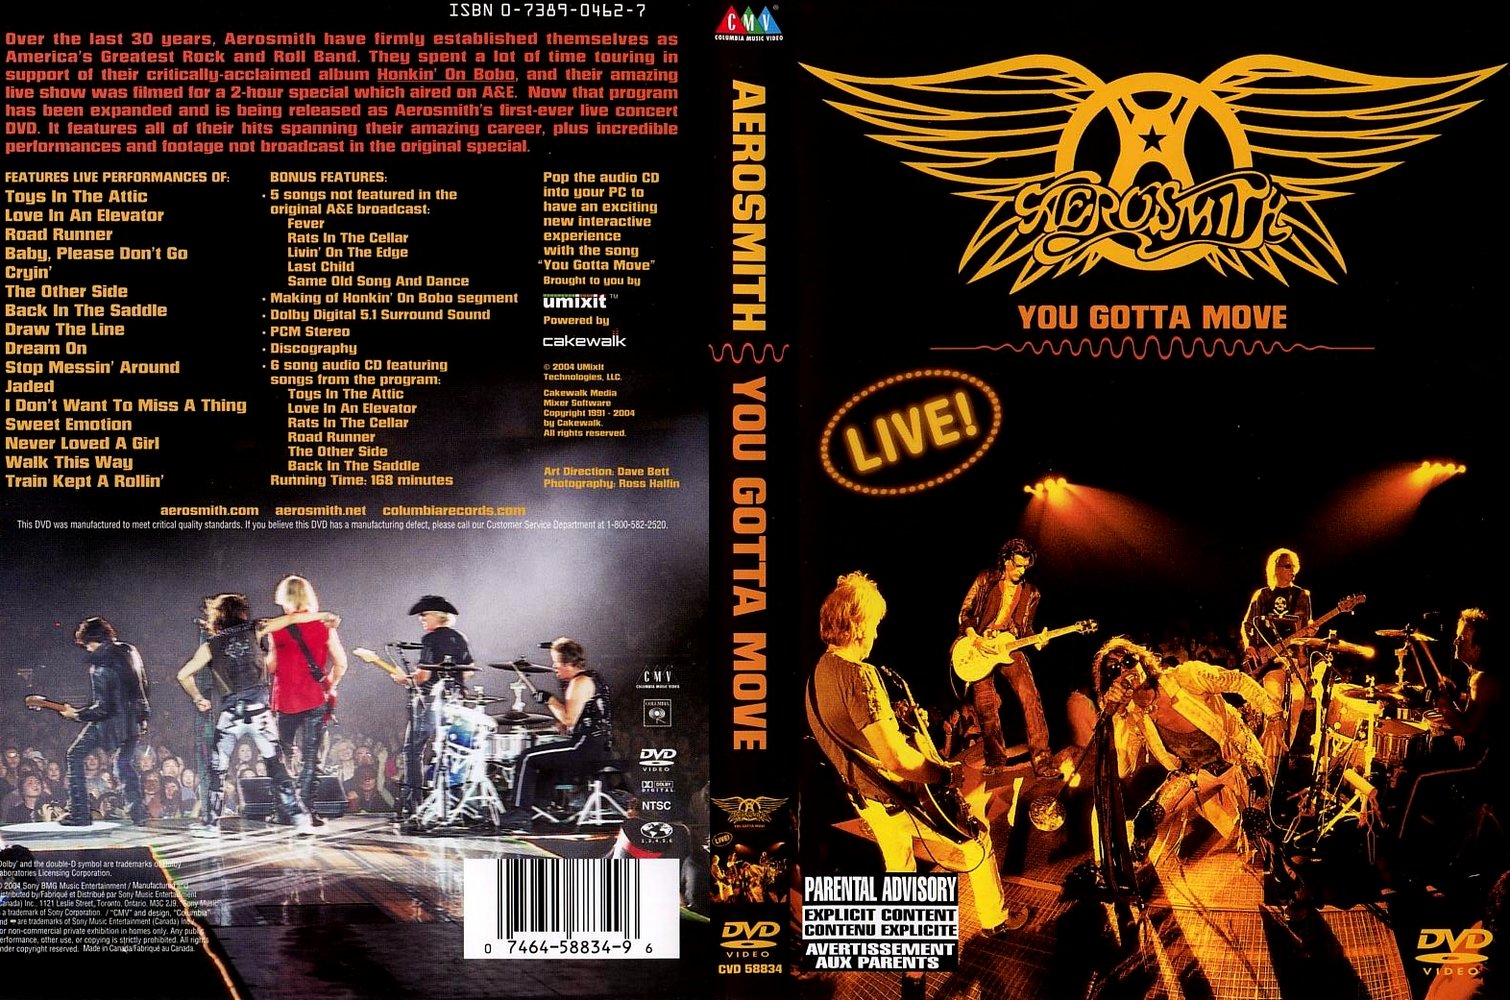 Jaquette DVD Aerosmith You gotta move